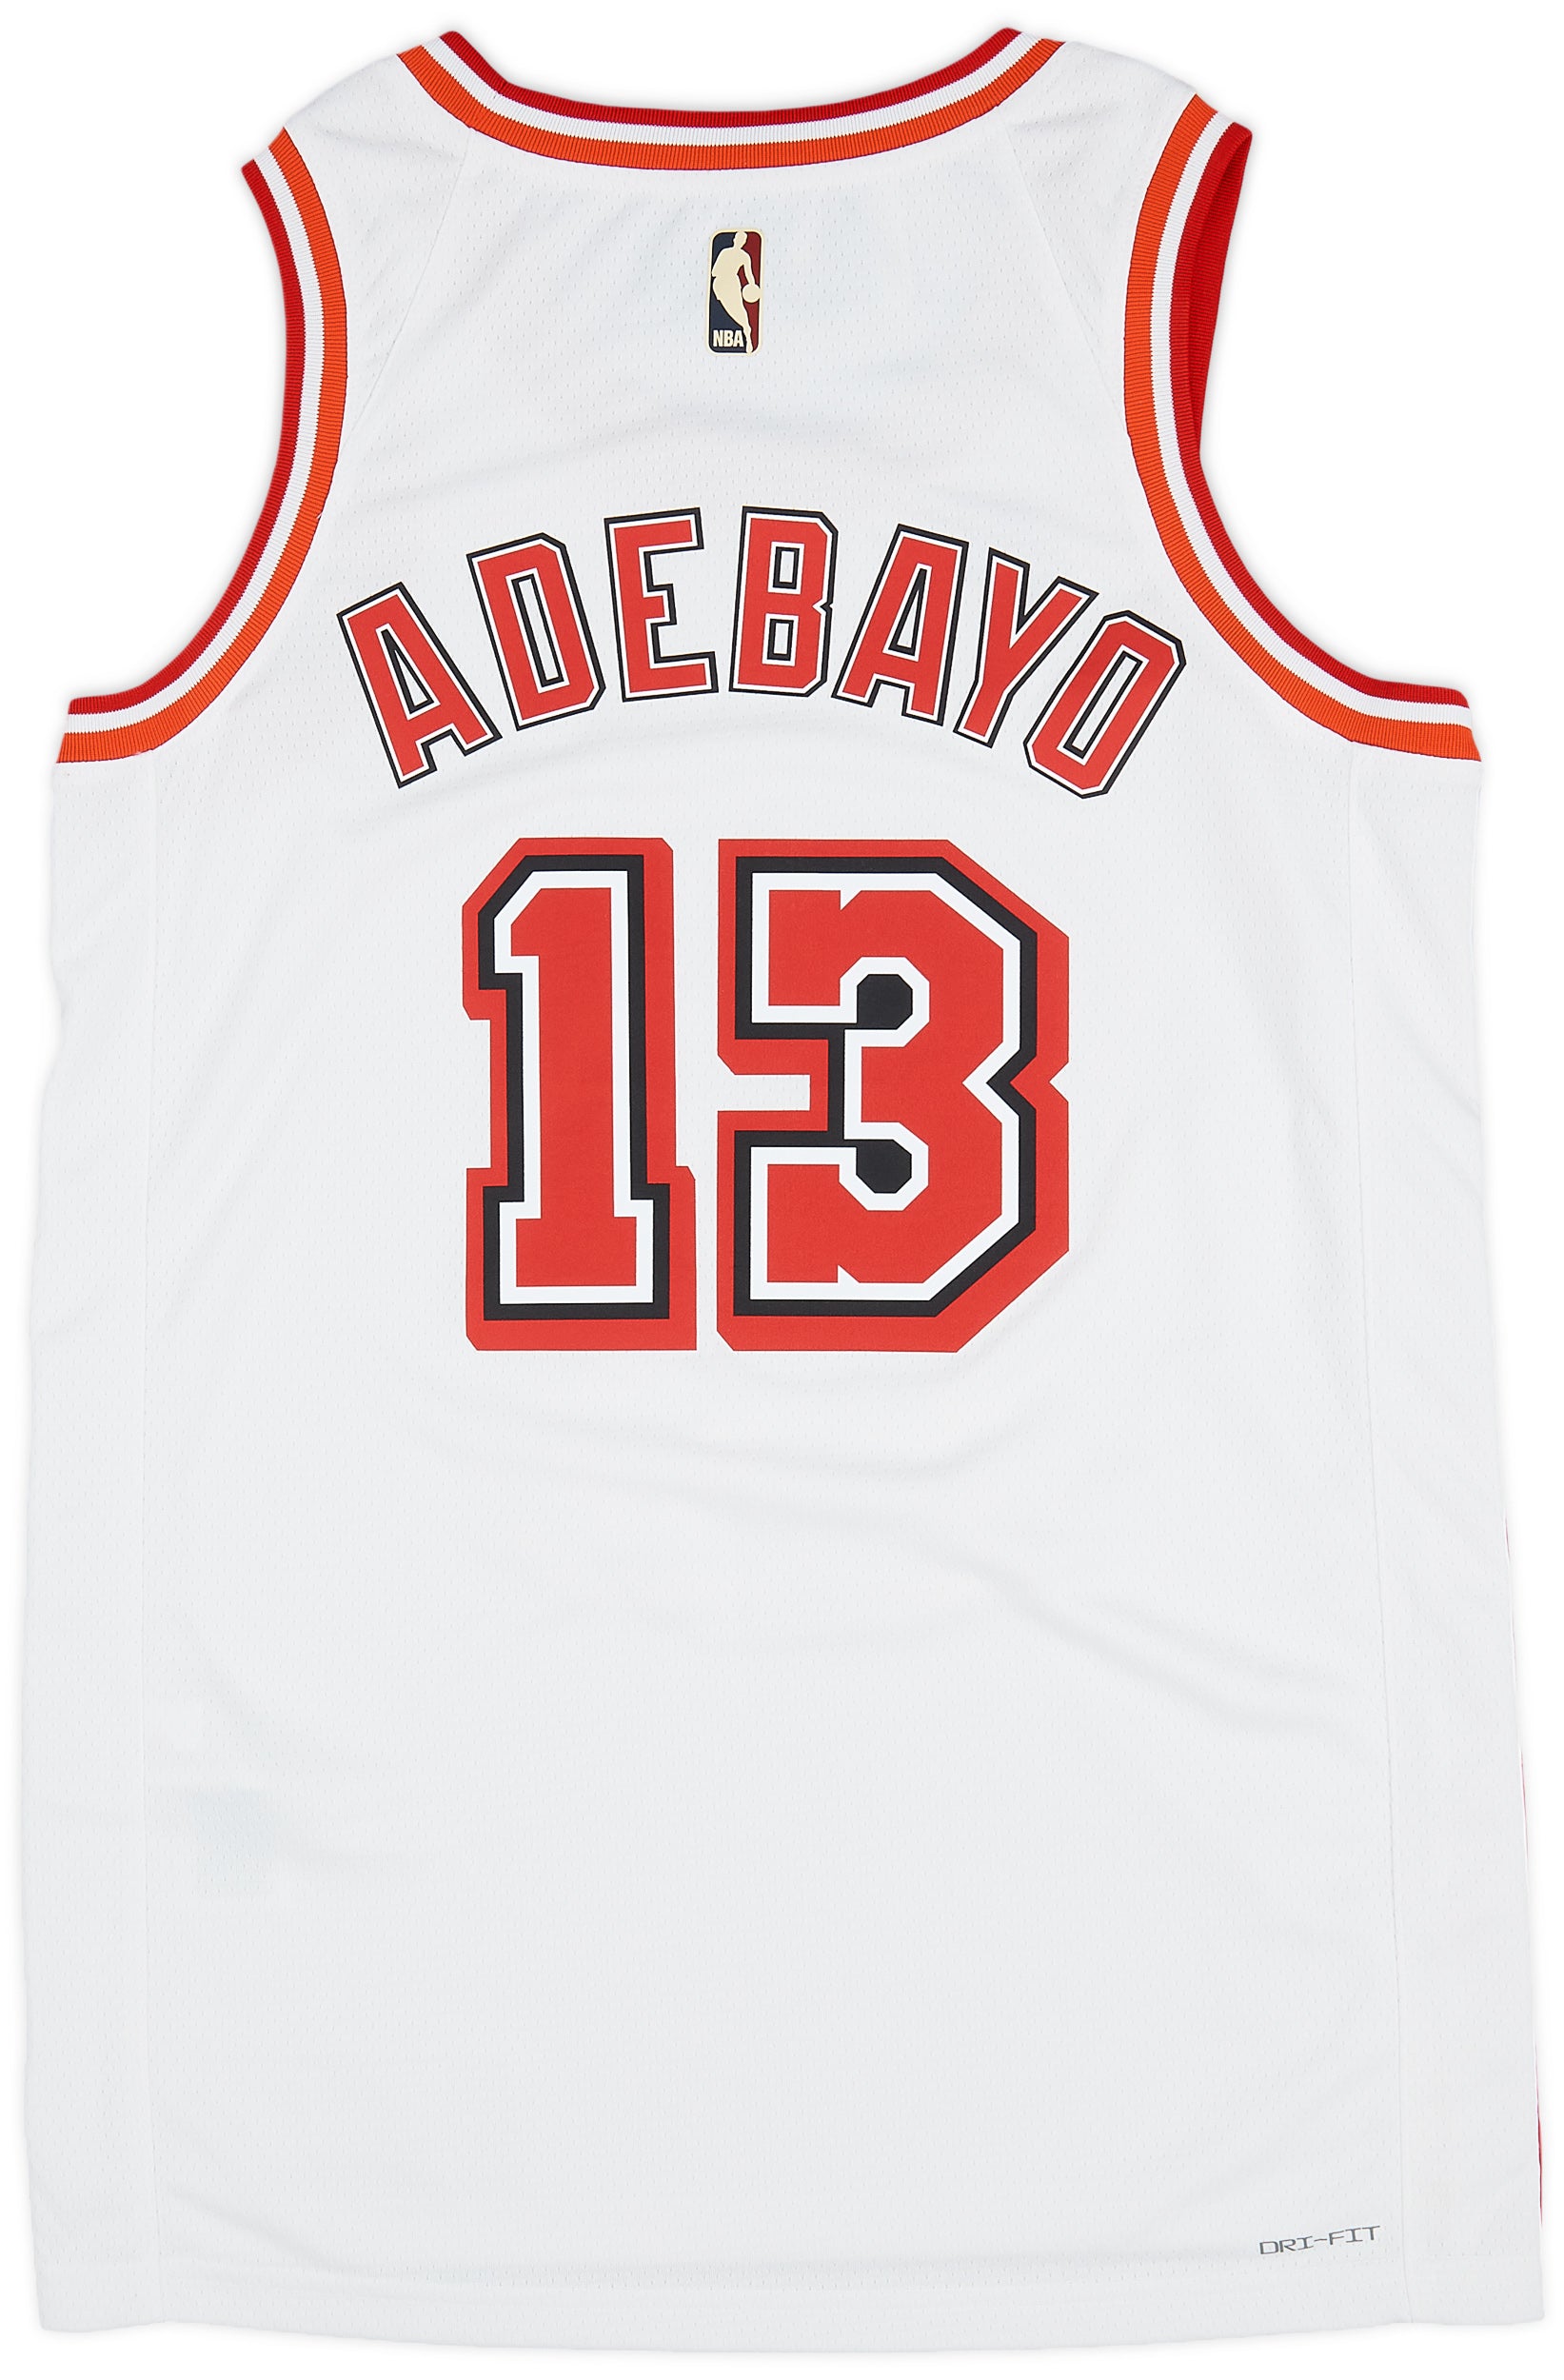 Chicago Bulls Michael Jordan #23 Nike Flight 8403 Black Red Jersey Size XXL